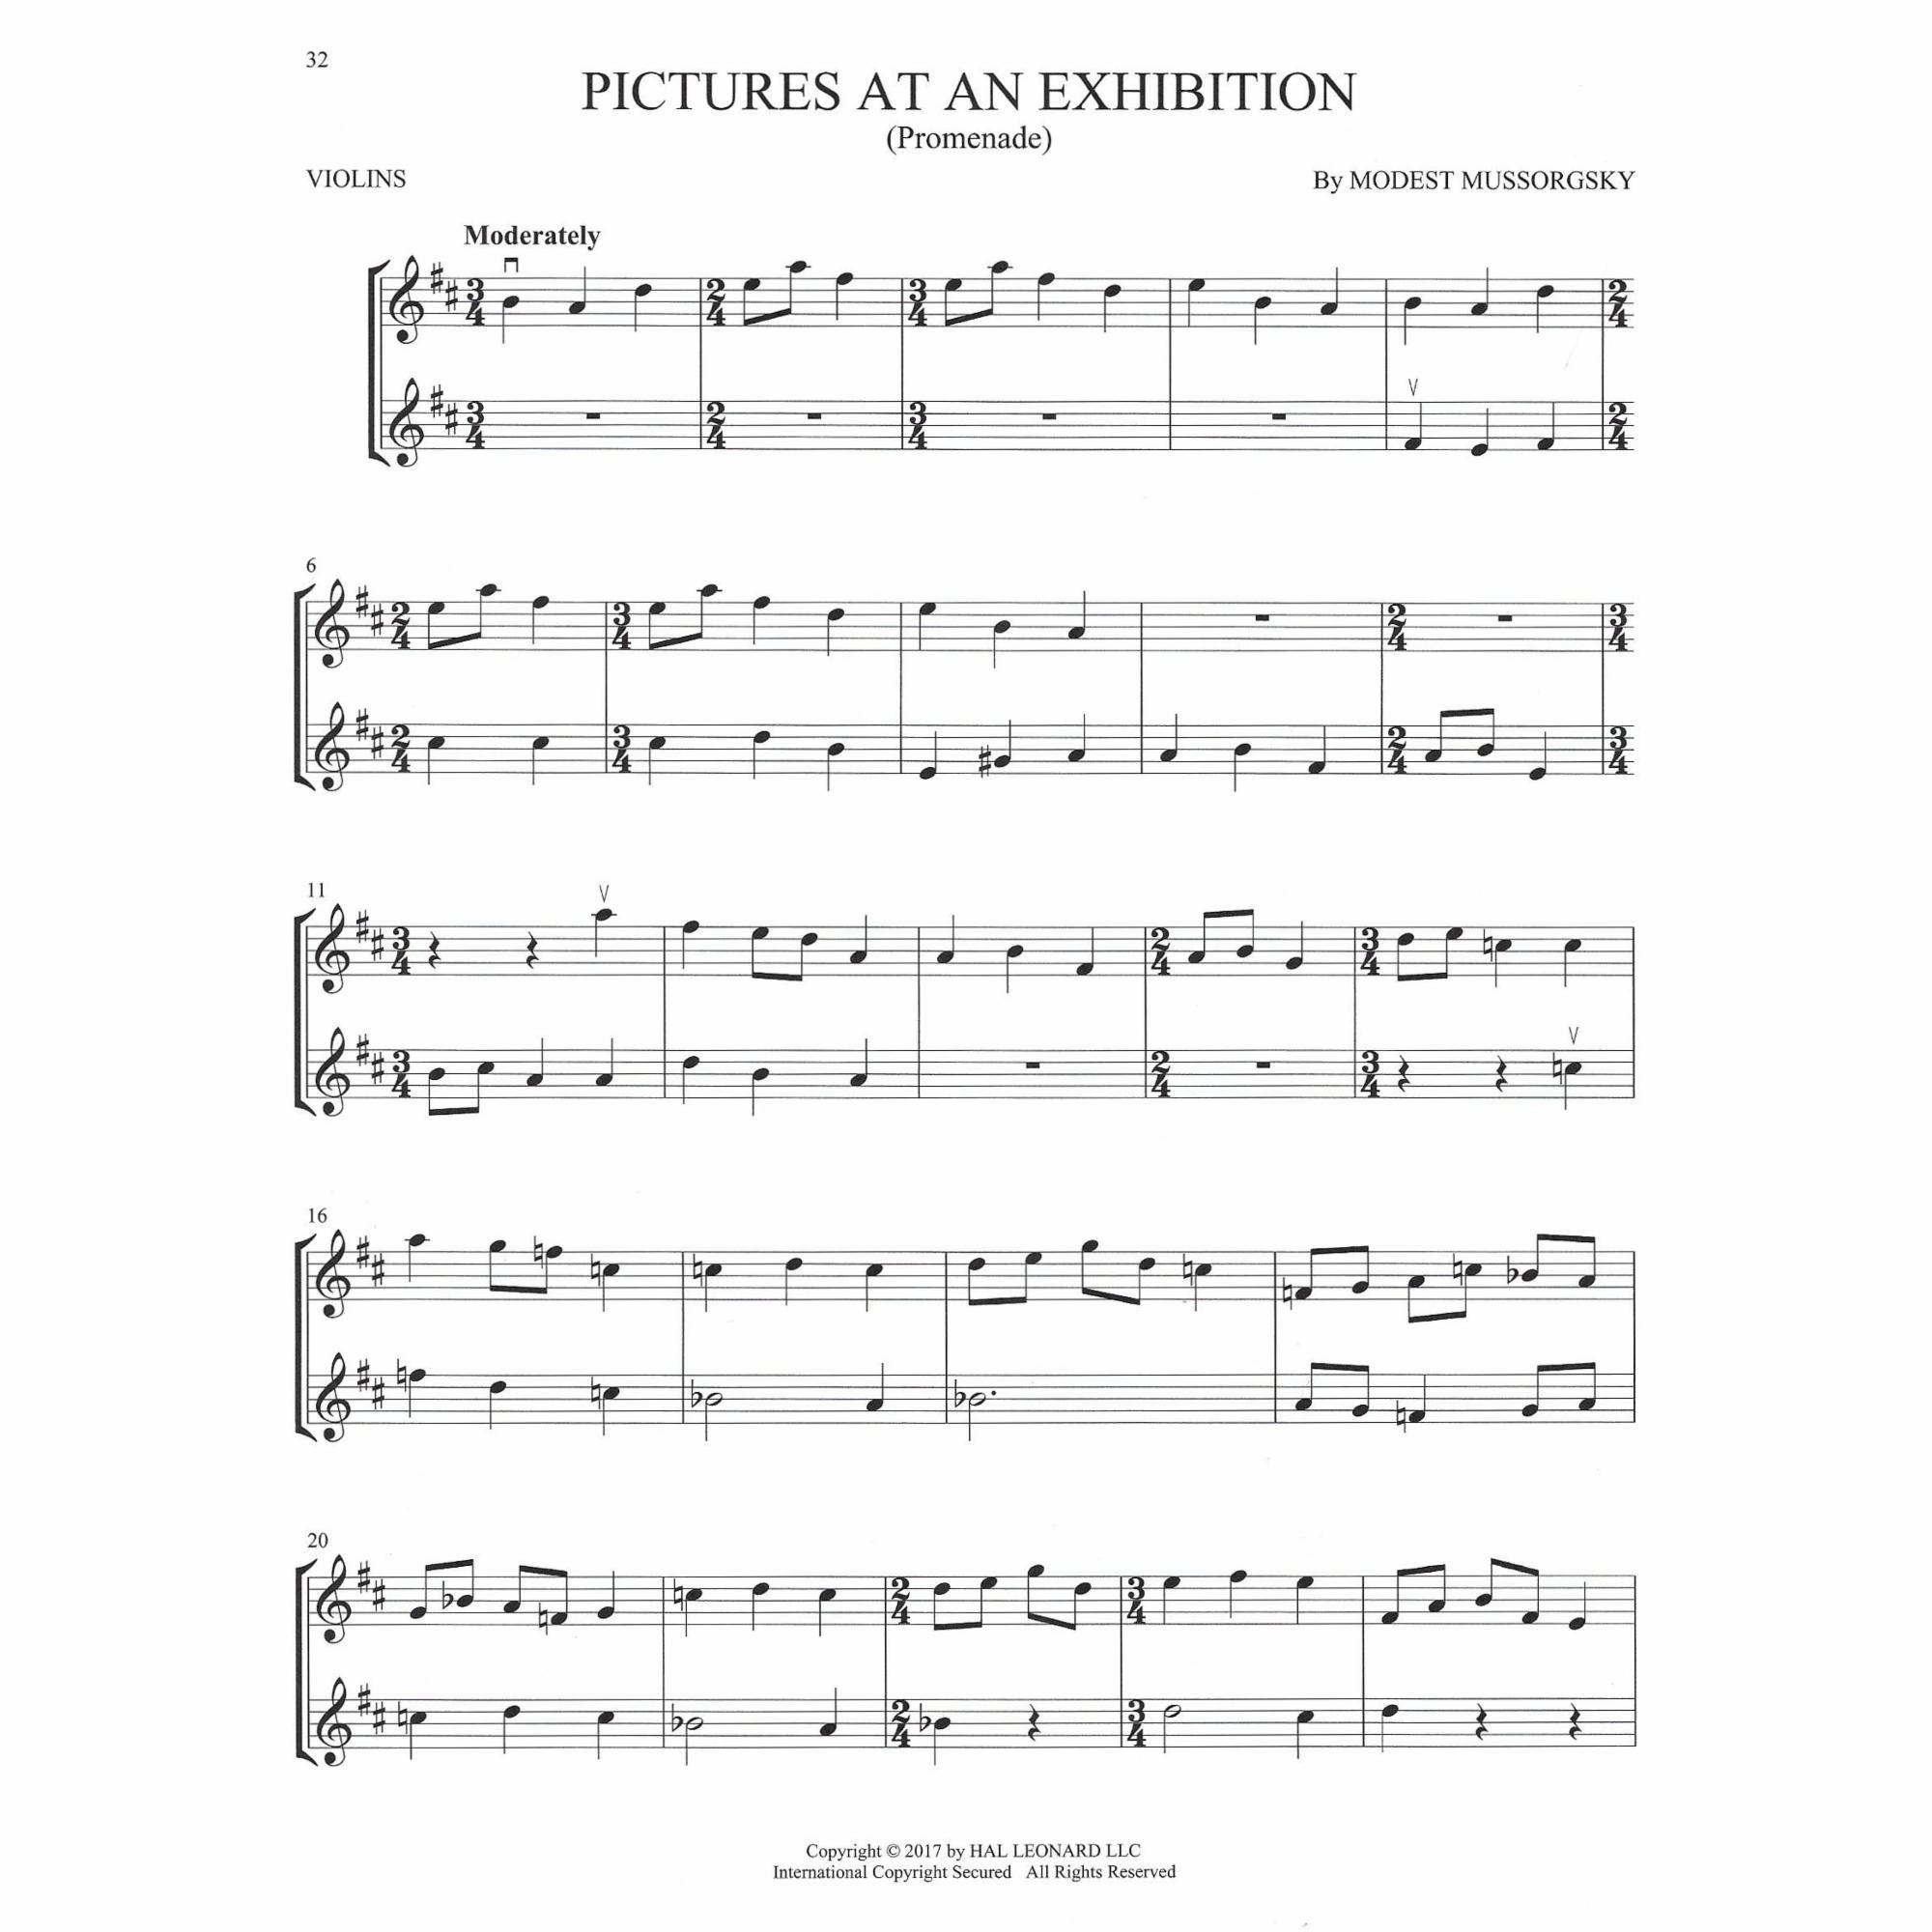 Sample: Two Violins (Pg. 32)